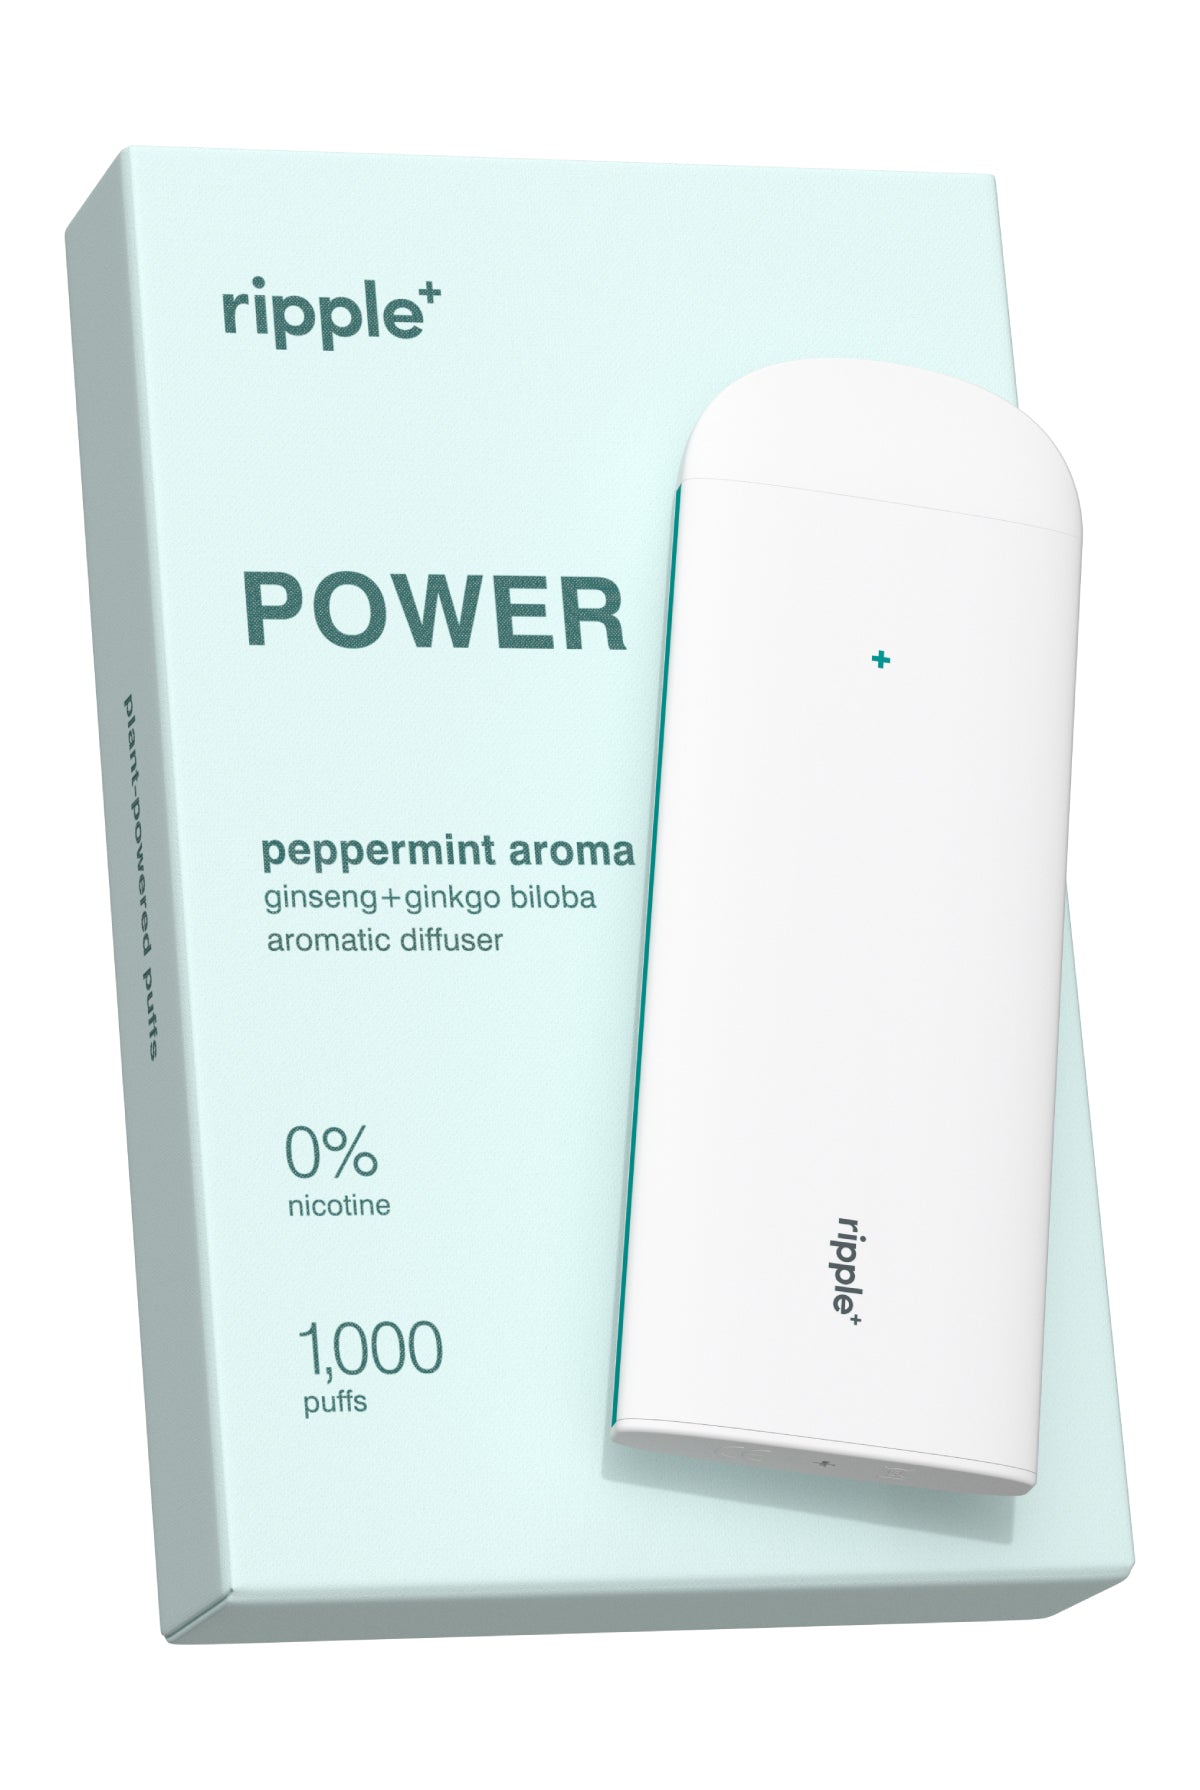 Ripple POWER Aromatic Diffuser New